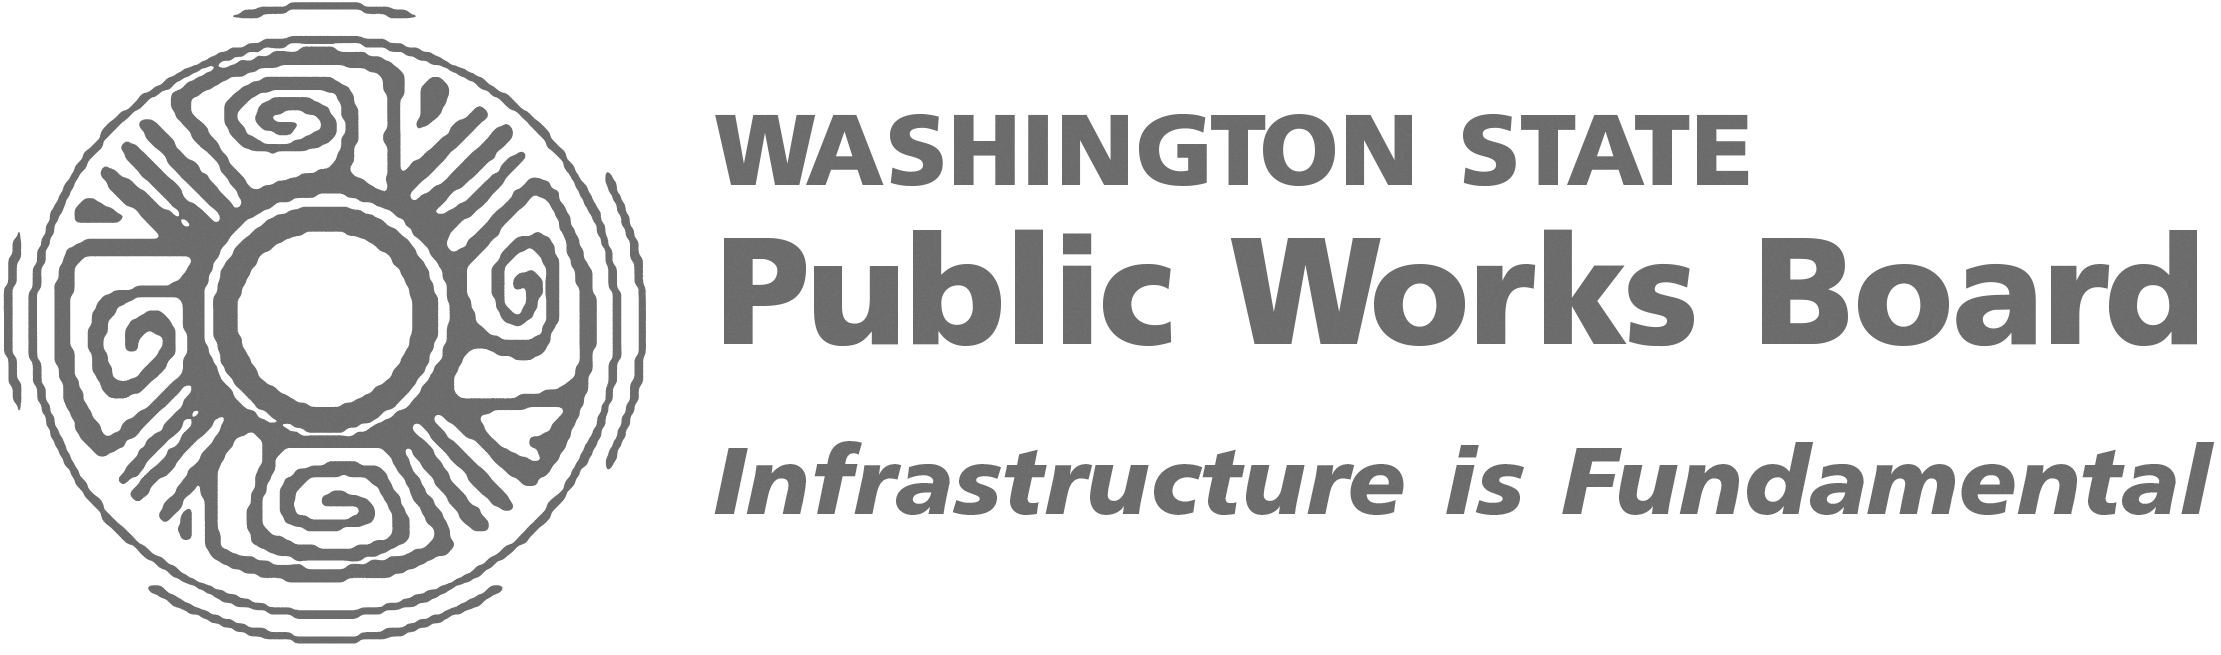 Washington Public Works Board opens application for $13.5 million in broadband project funding